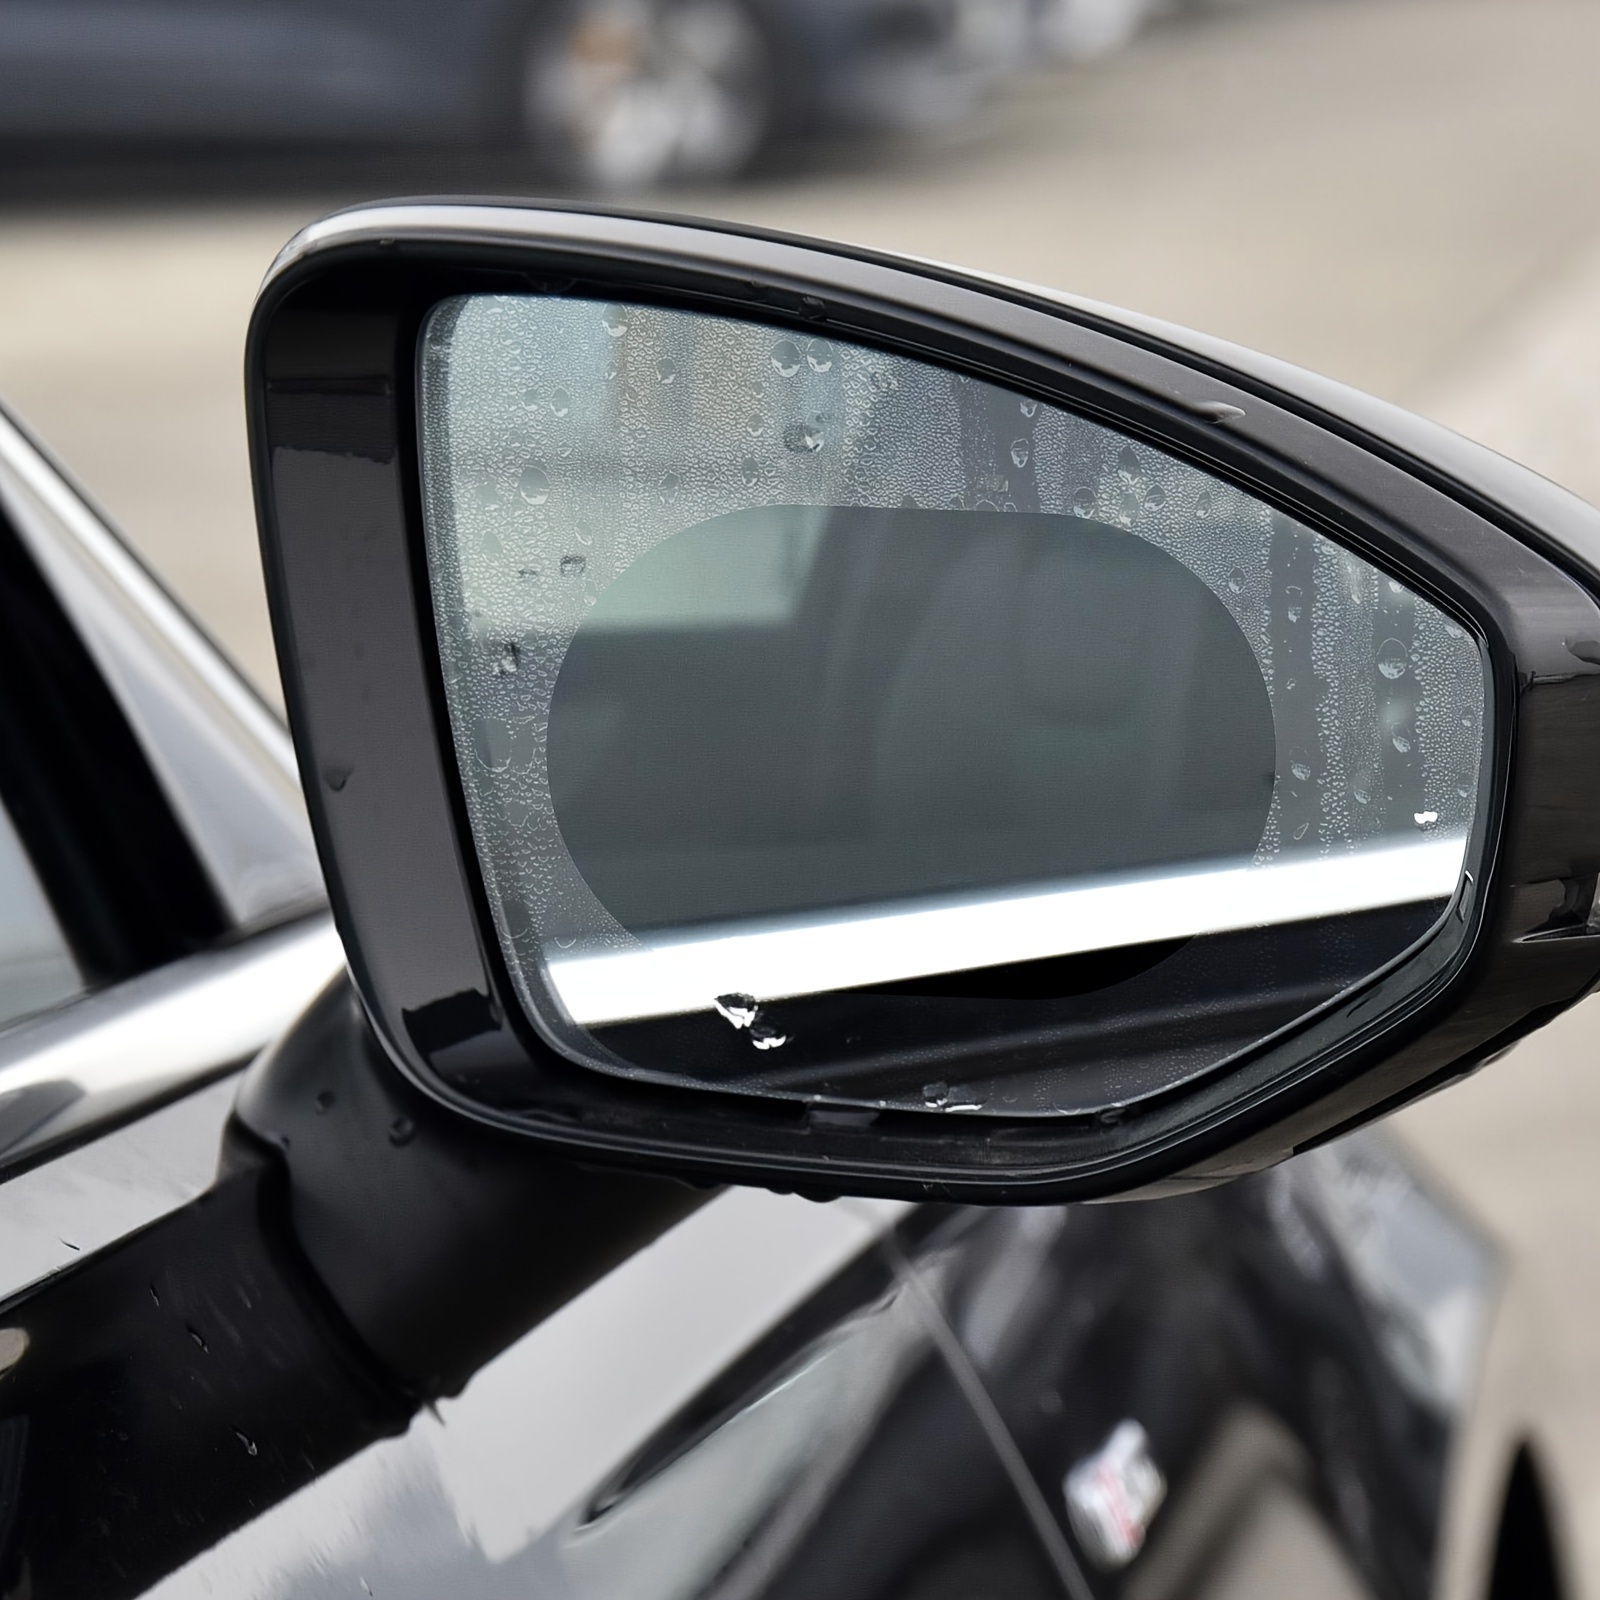 Premium AI Image  Marvelous Black Car Side Mirrors Isolated on White  Background